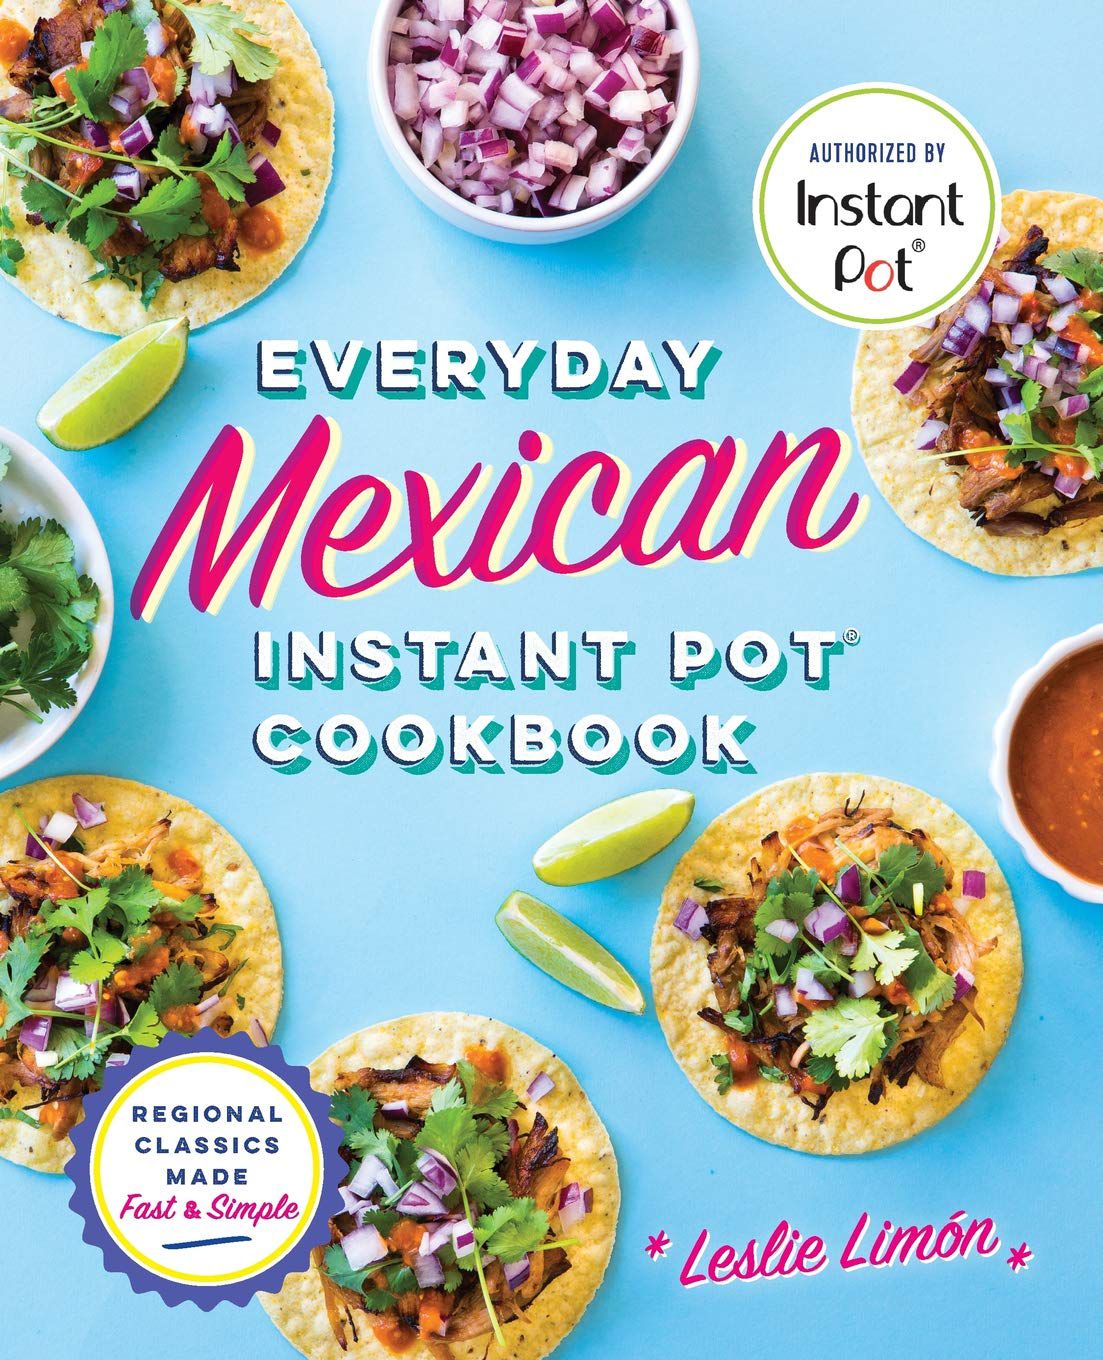 We Found the Best Instant Pot Cookbook